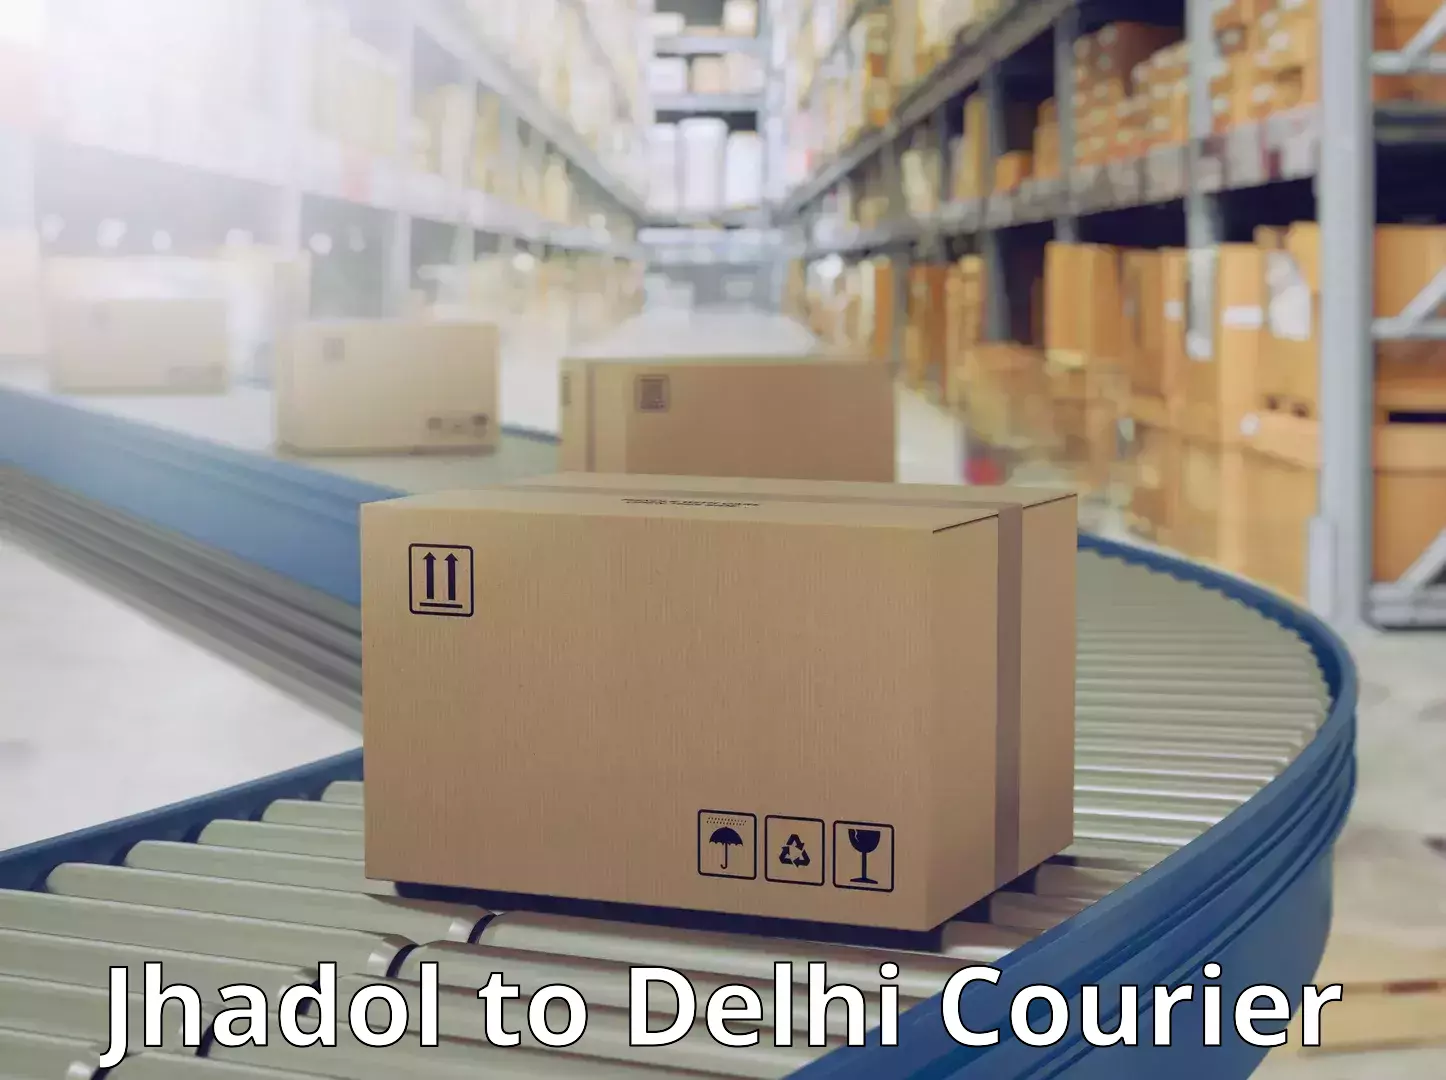 Flexible delivery scheduling Jhadol to Delhi